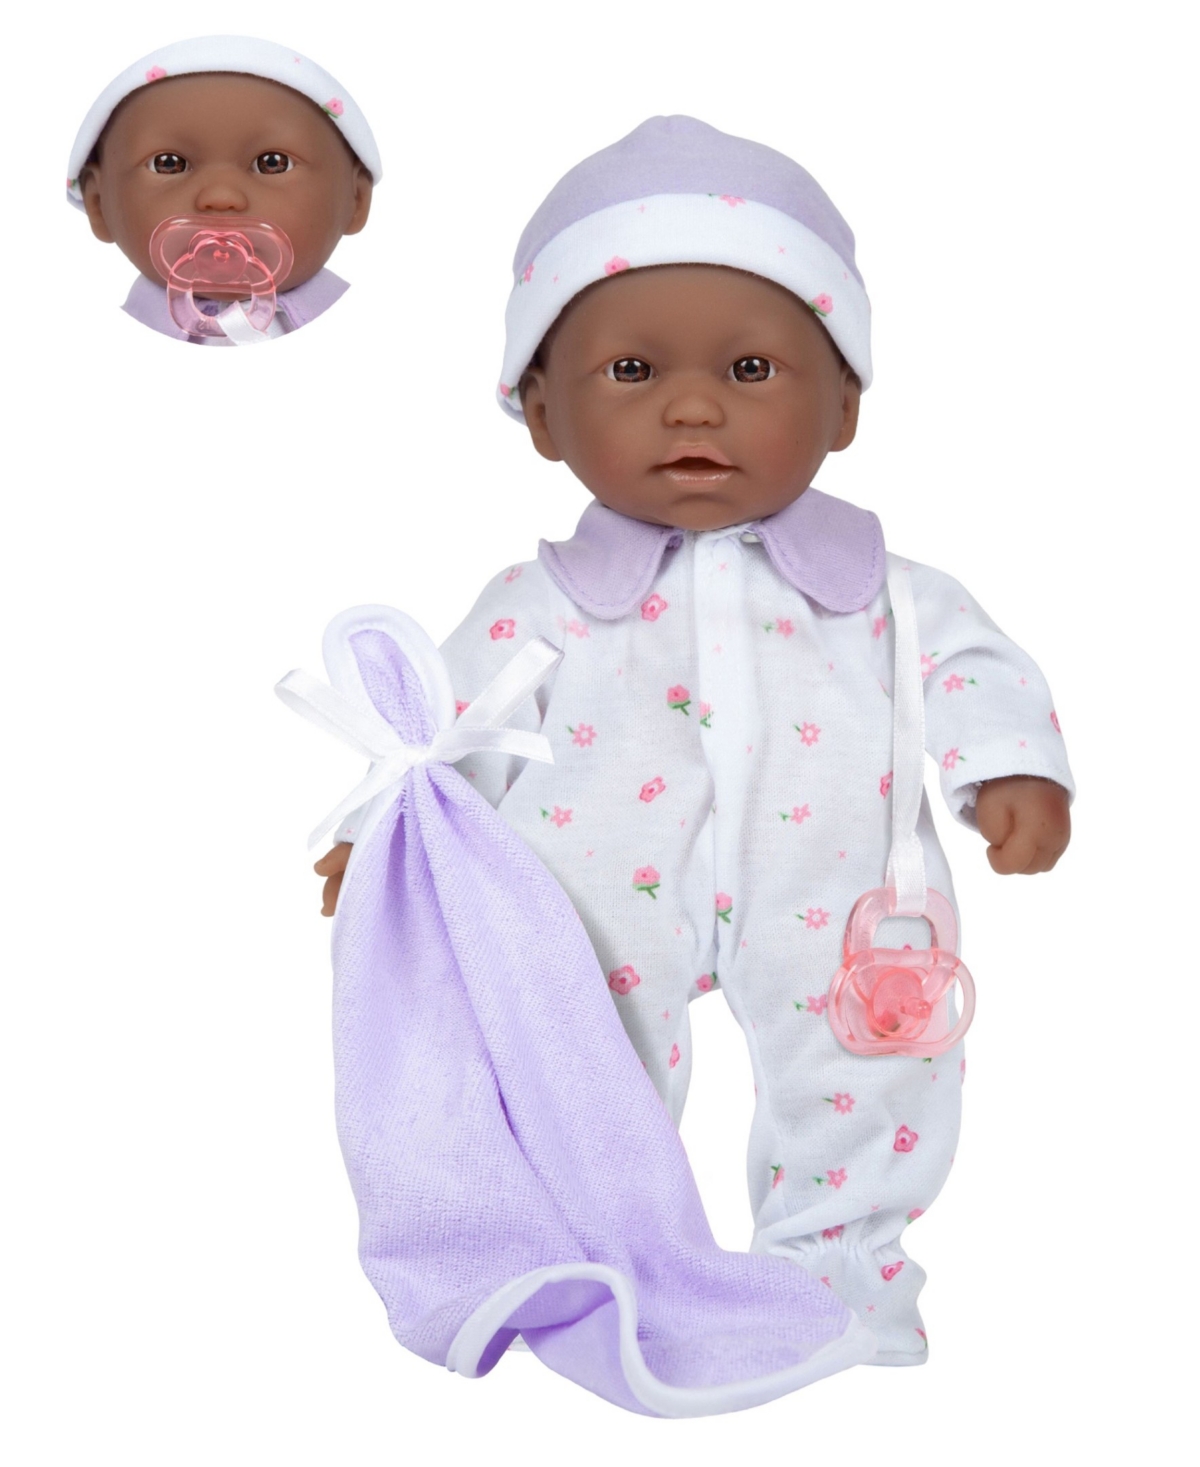 Jc Toys La Baby African American 11" Soft Body Baby Doll Purple Outfit In African American - Purple